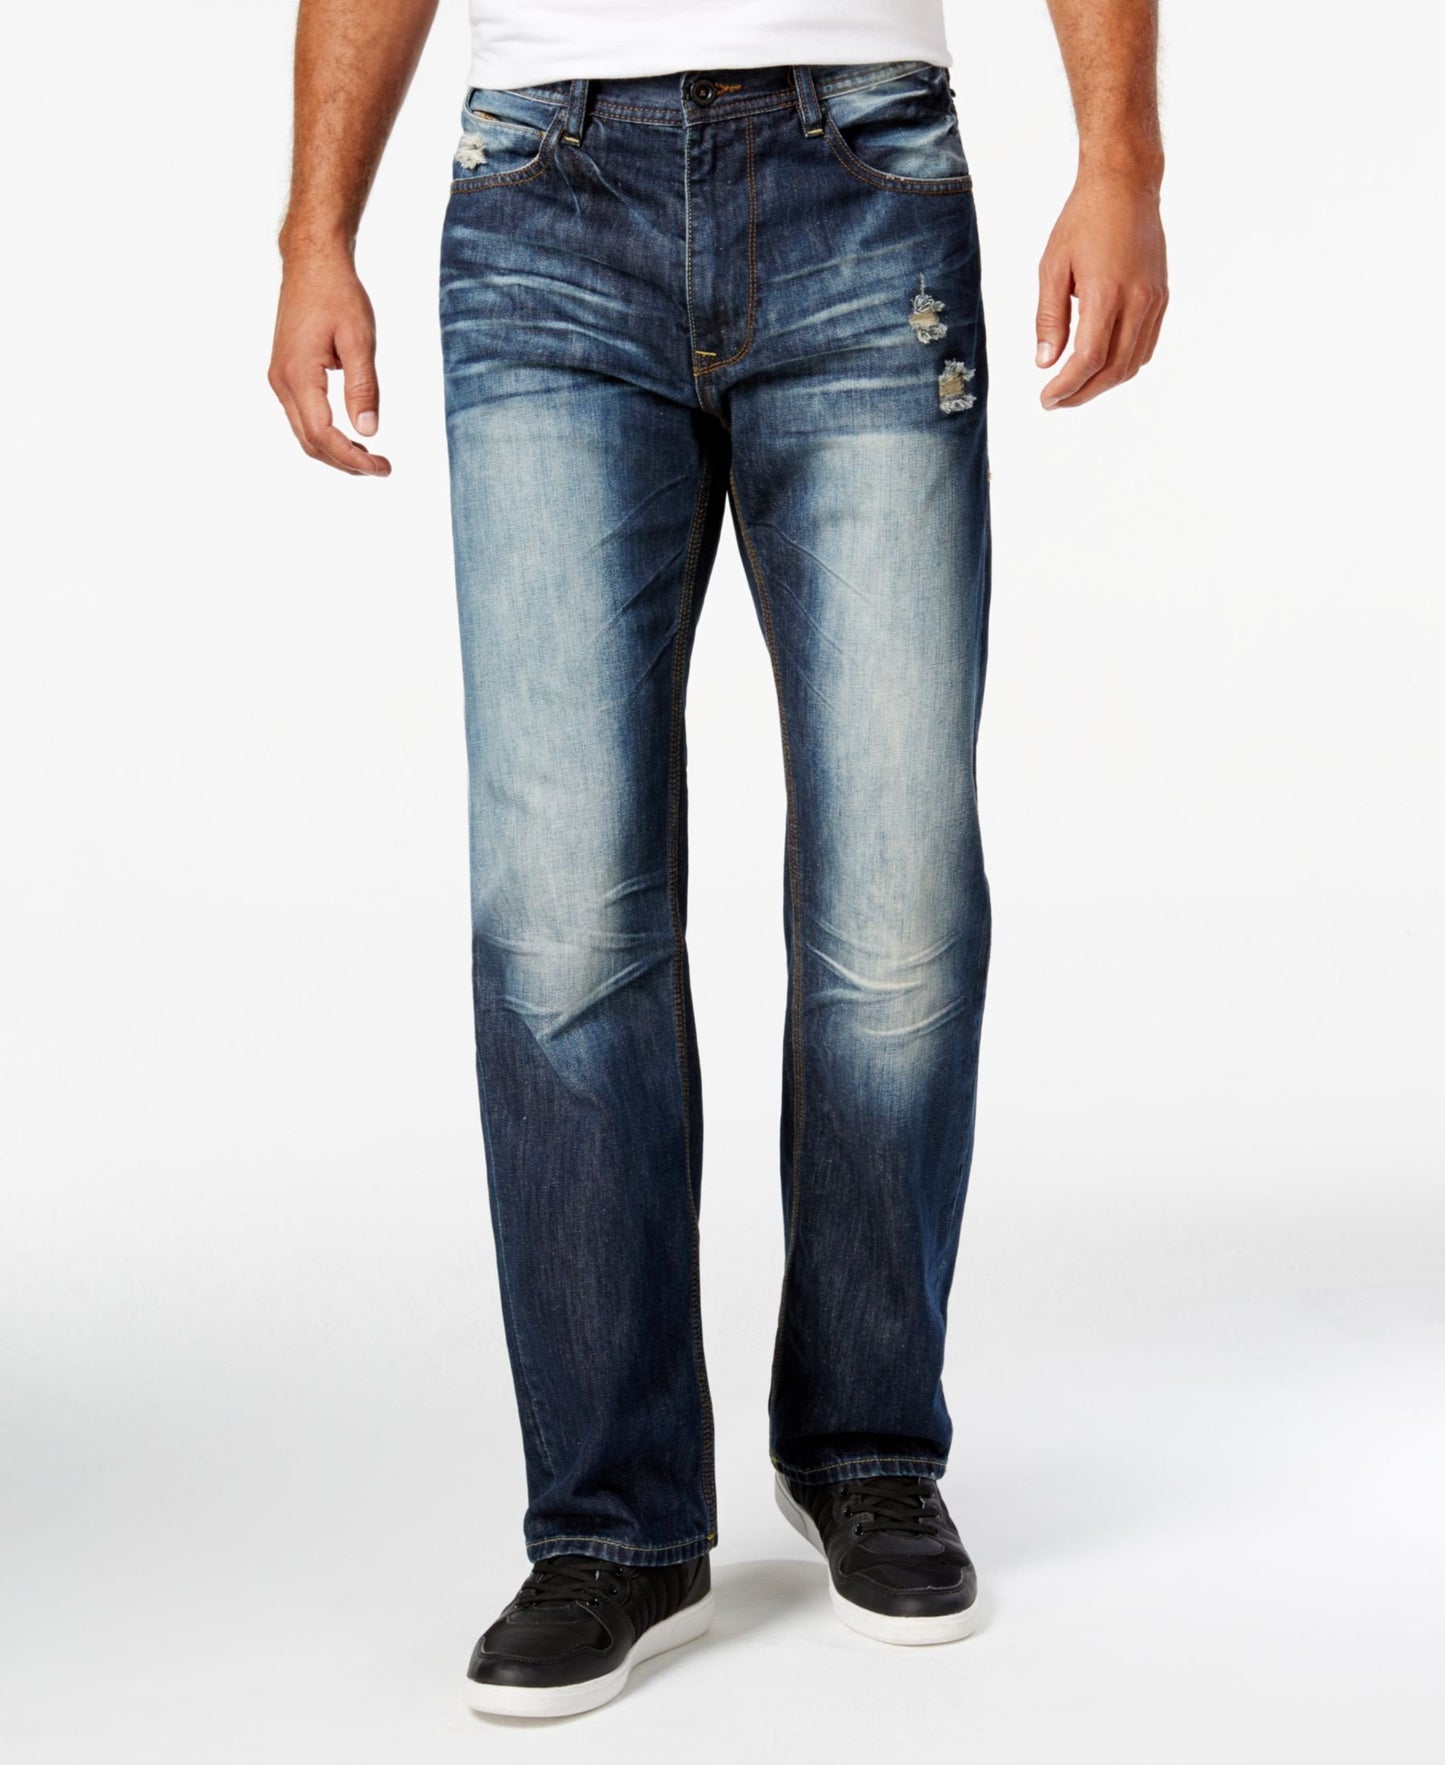 Sean John Men's Hamilton Straight-Fit Jeans